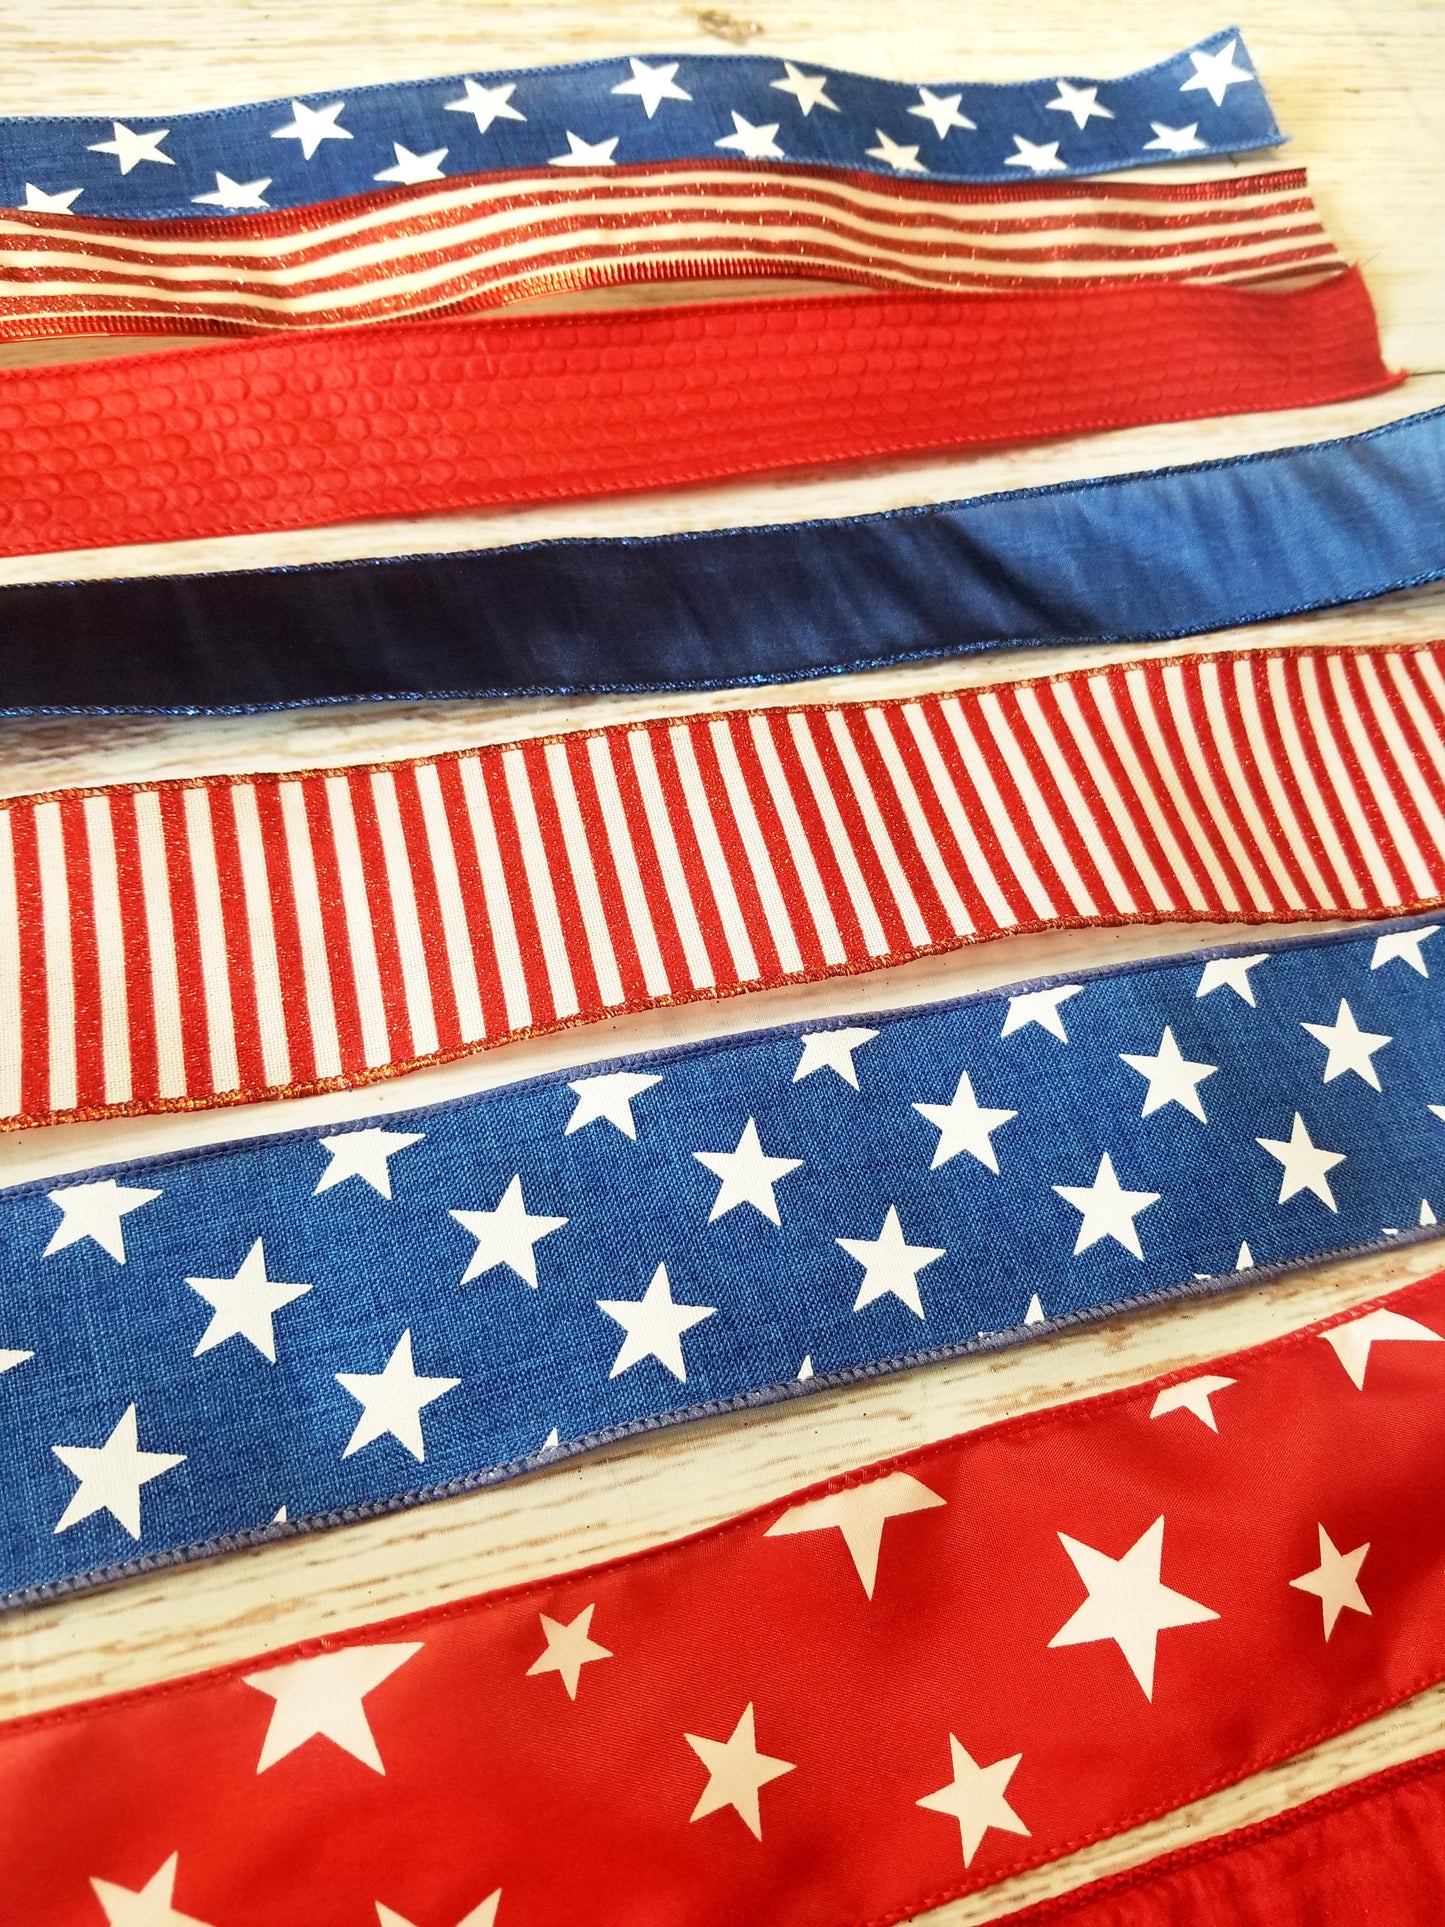 Patriotic Bow Kit | Advanced - Designer DIY